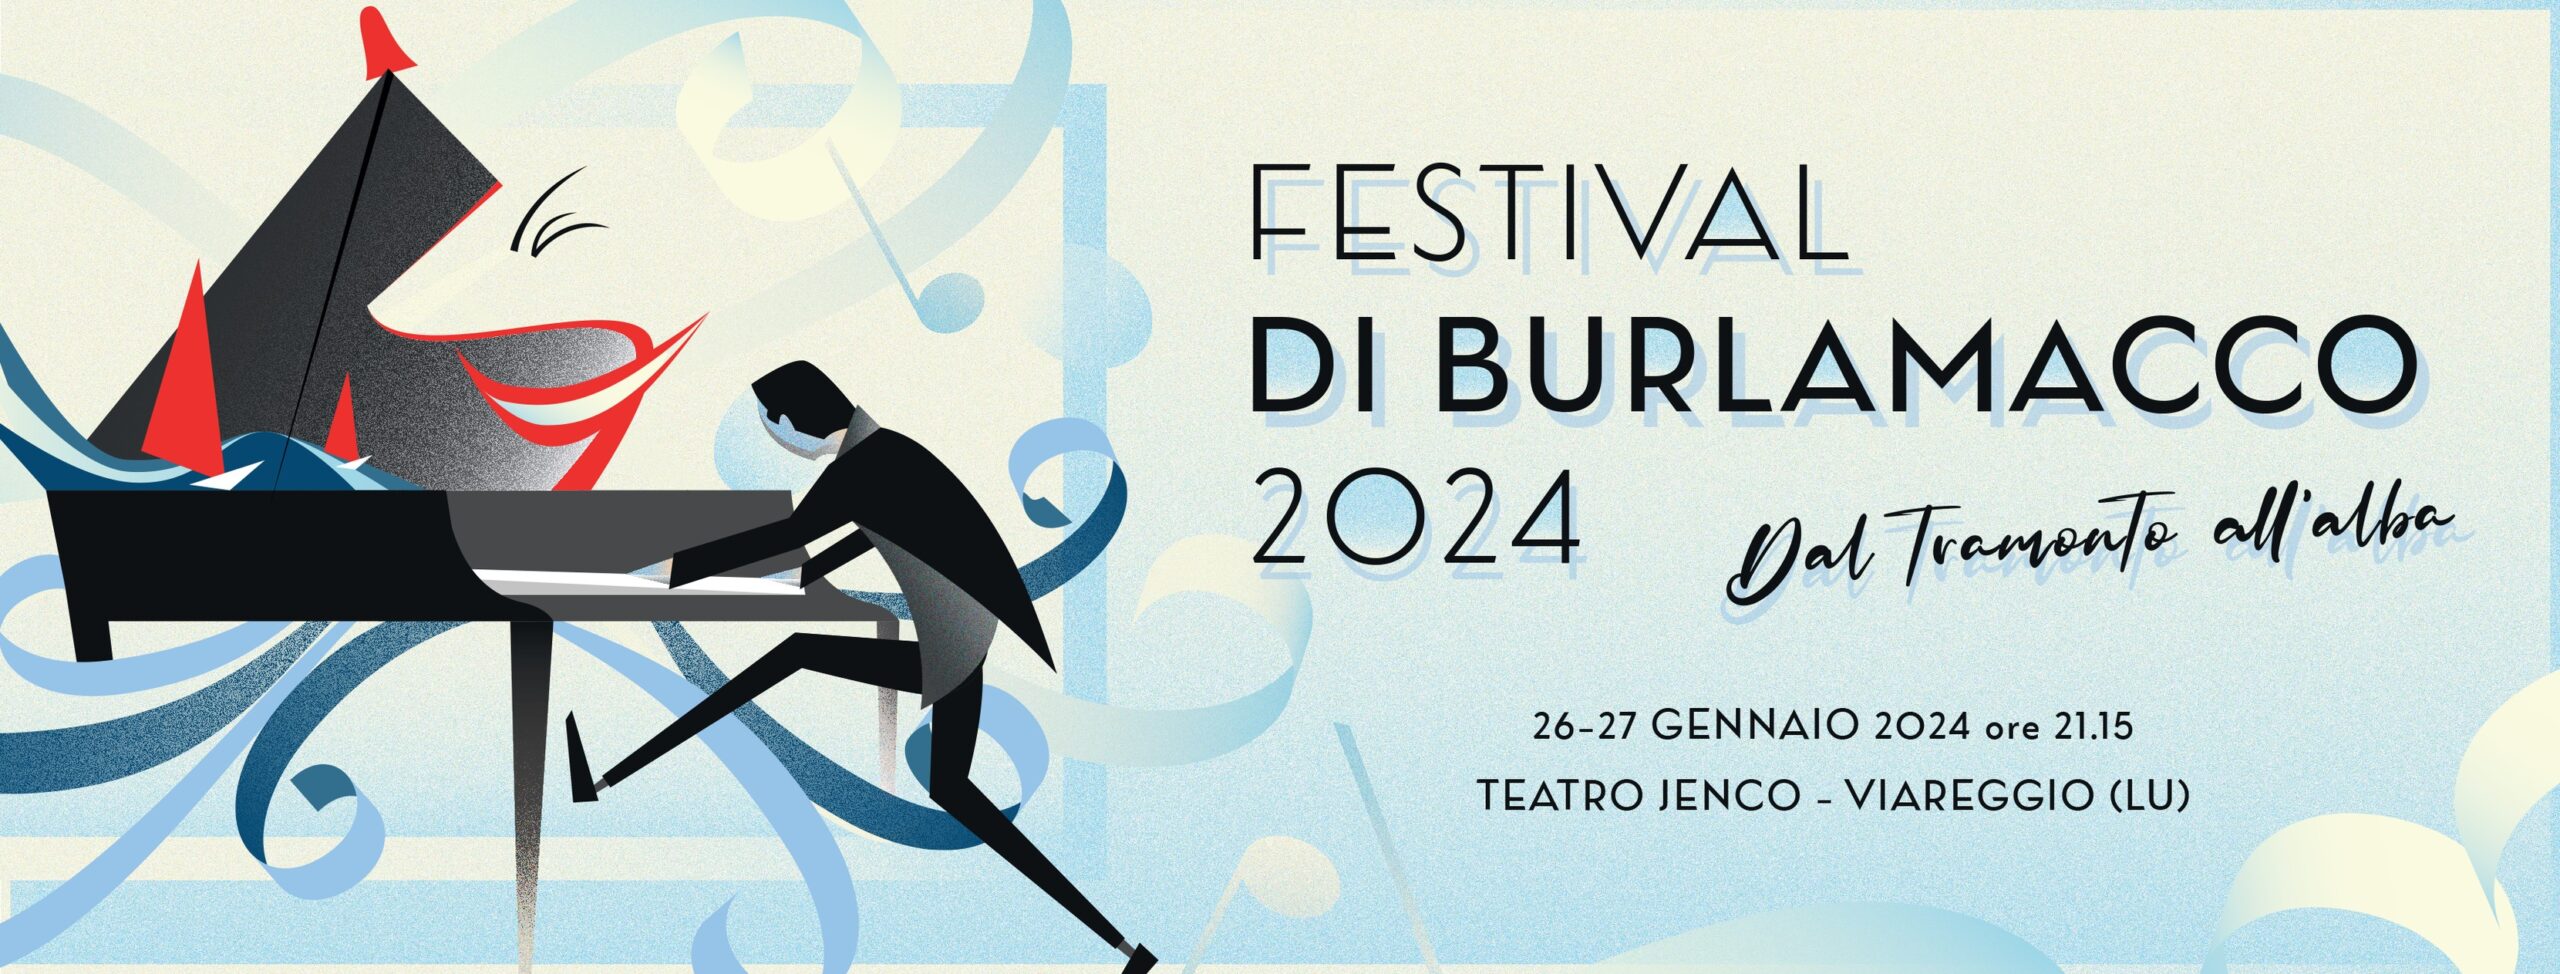 Festival di Burlamacco 2024- serata finale